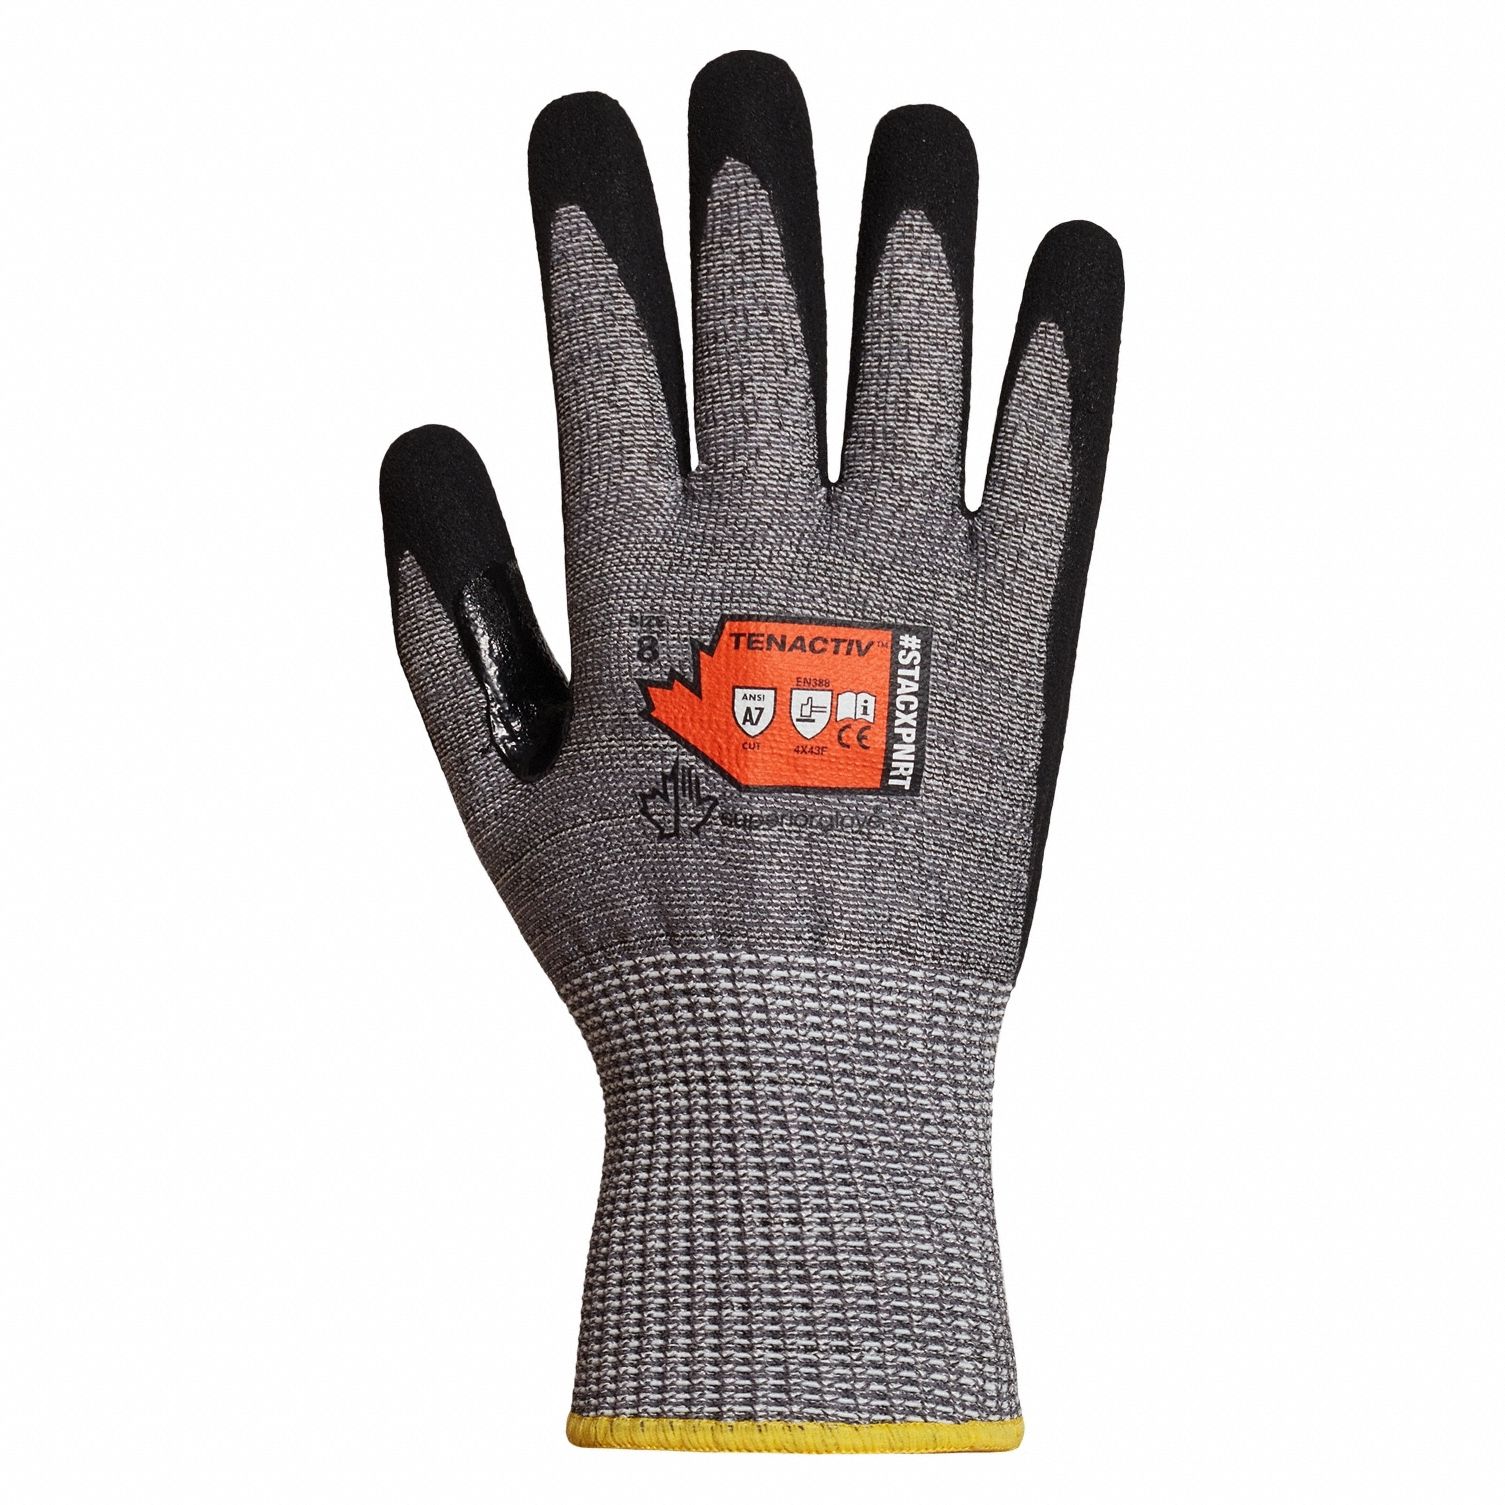 Majestic 33-7705 Cut-Less KorPlex Cut and Puncture Resistant Gloves - ANSI  Cut Level A7